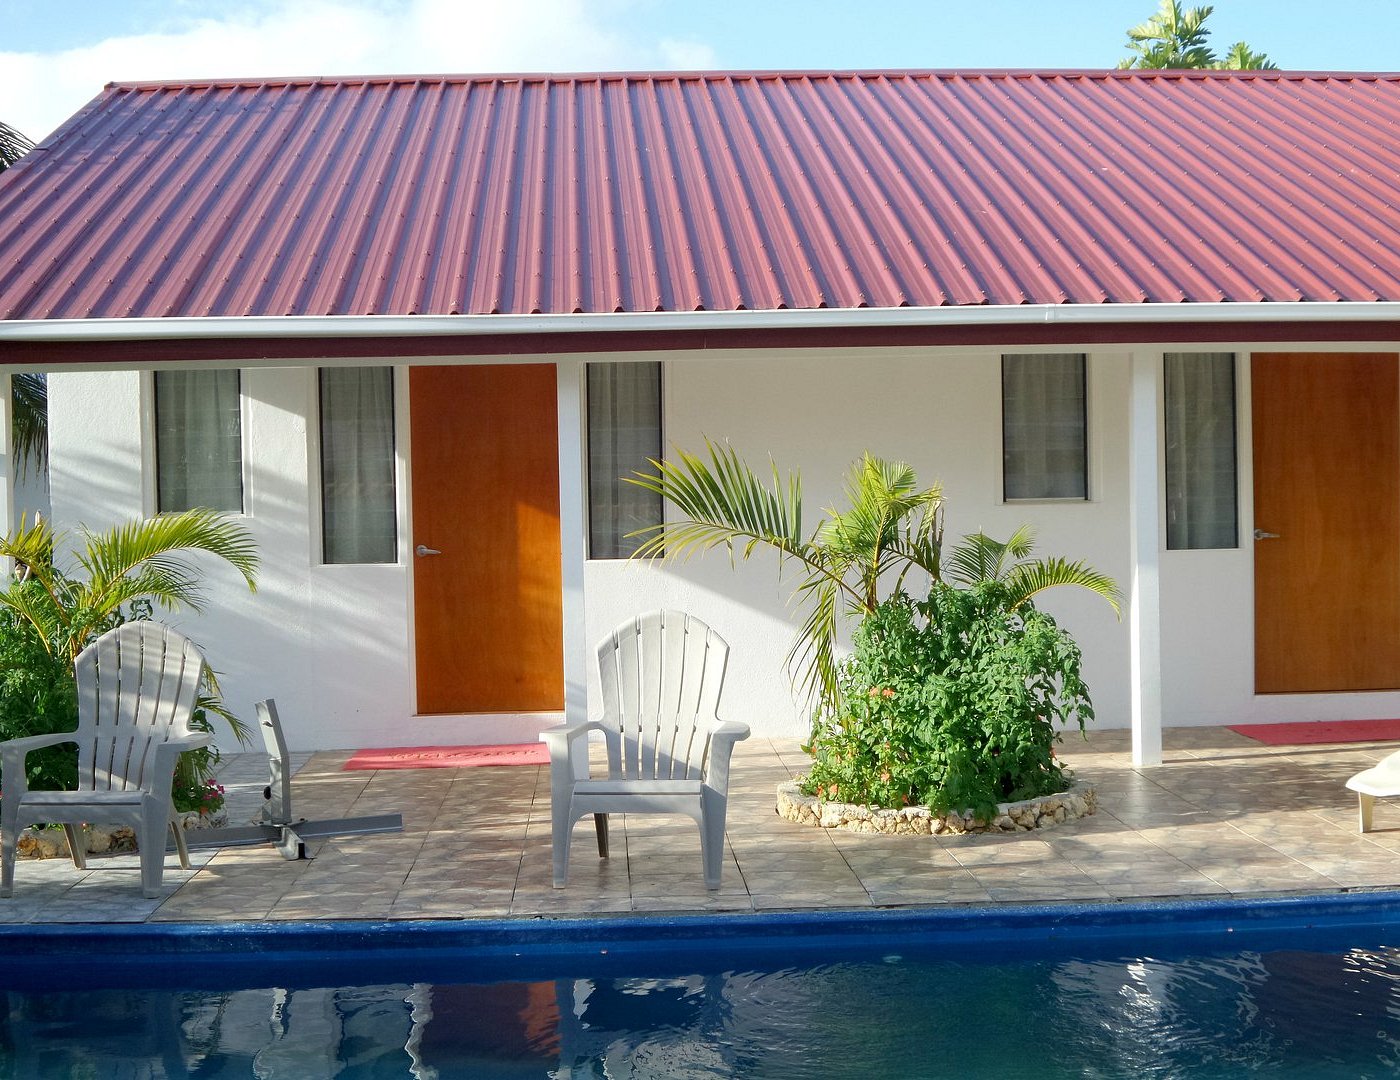 The Tropical Villa image